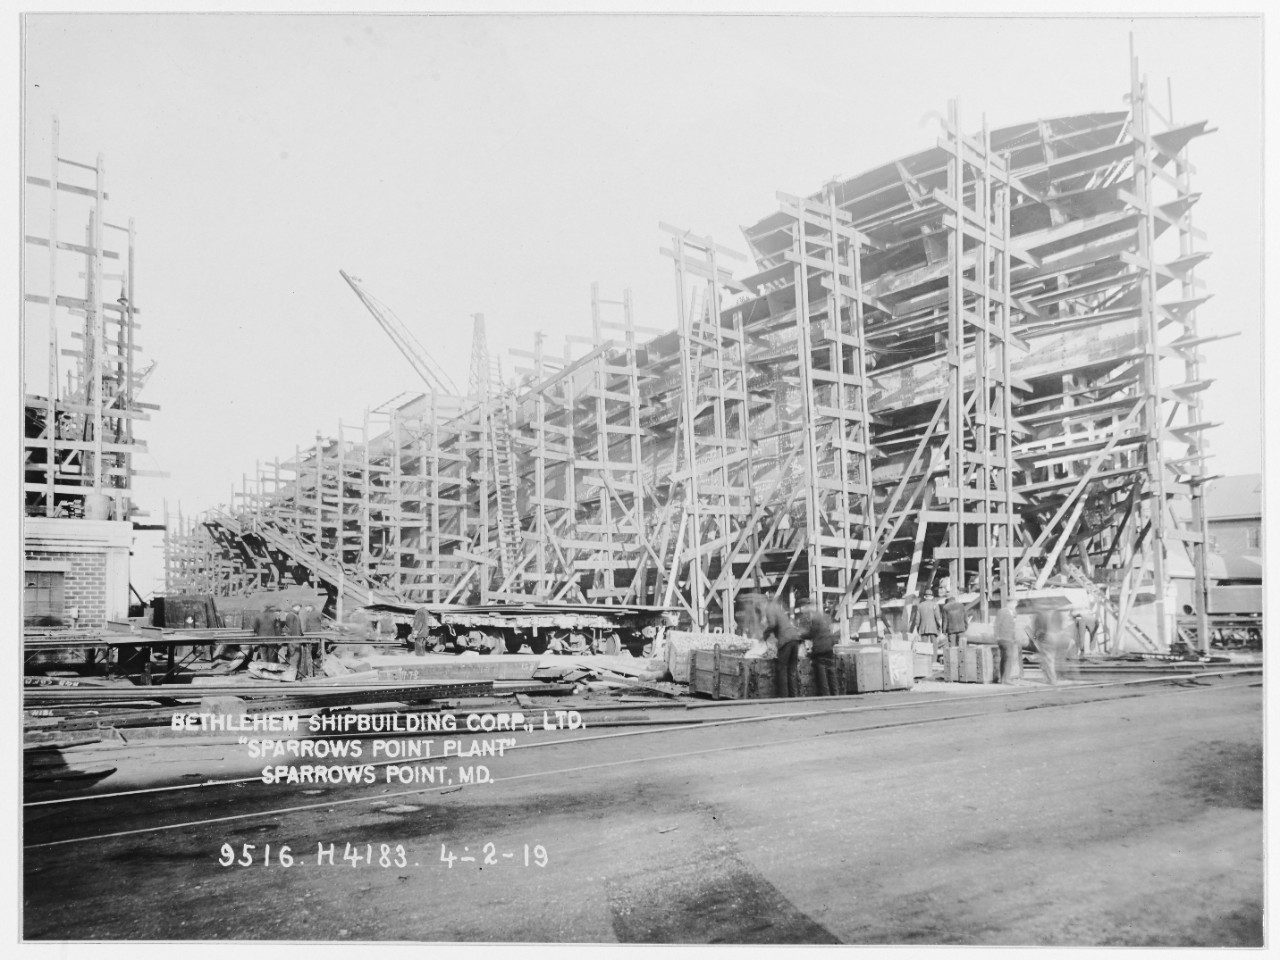 Bethlehem Shipbuilding Corp., Sparrows Point, Maryland